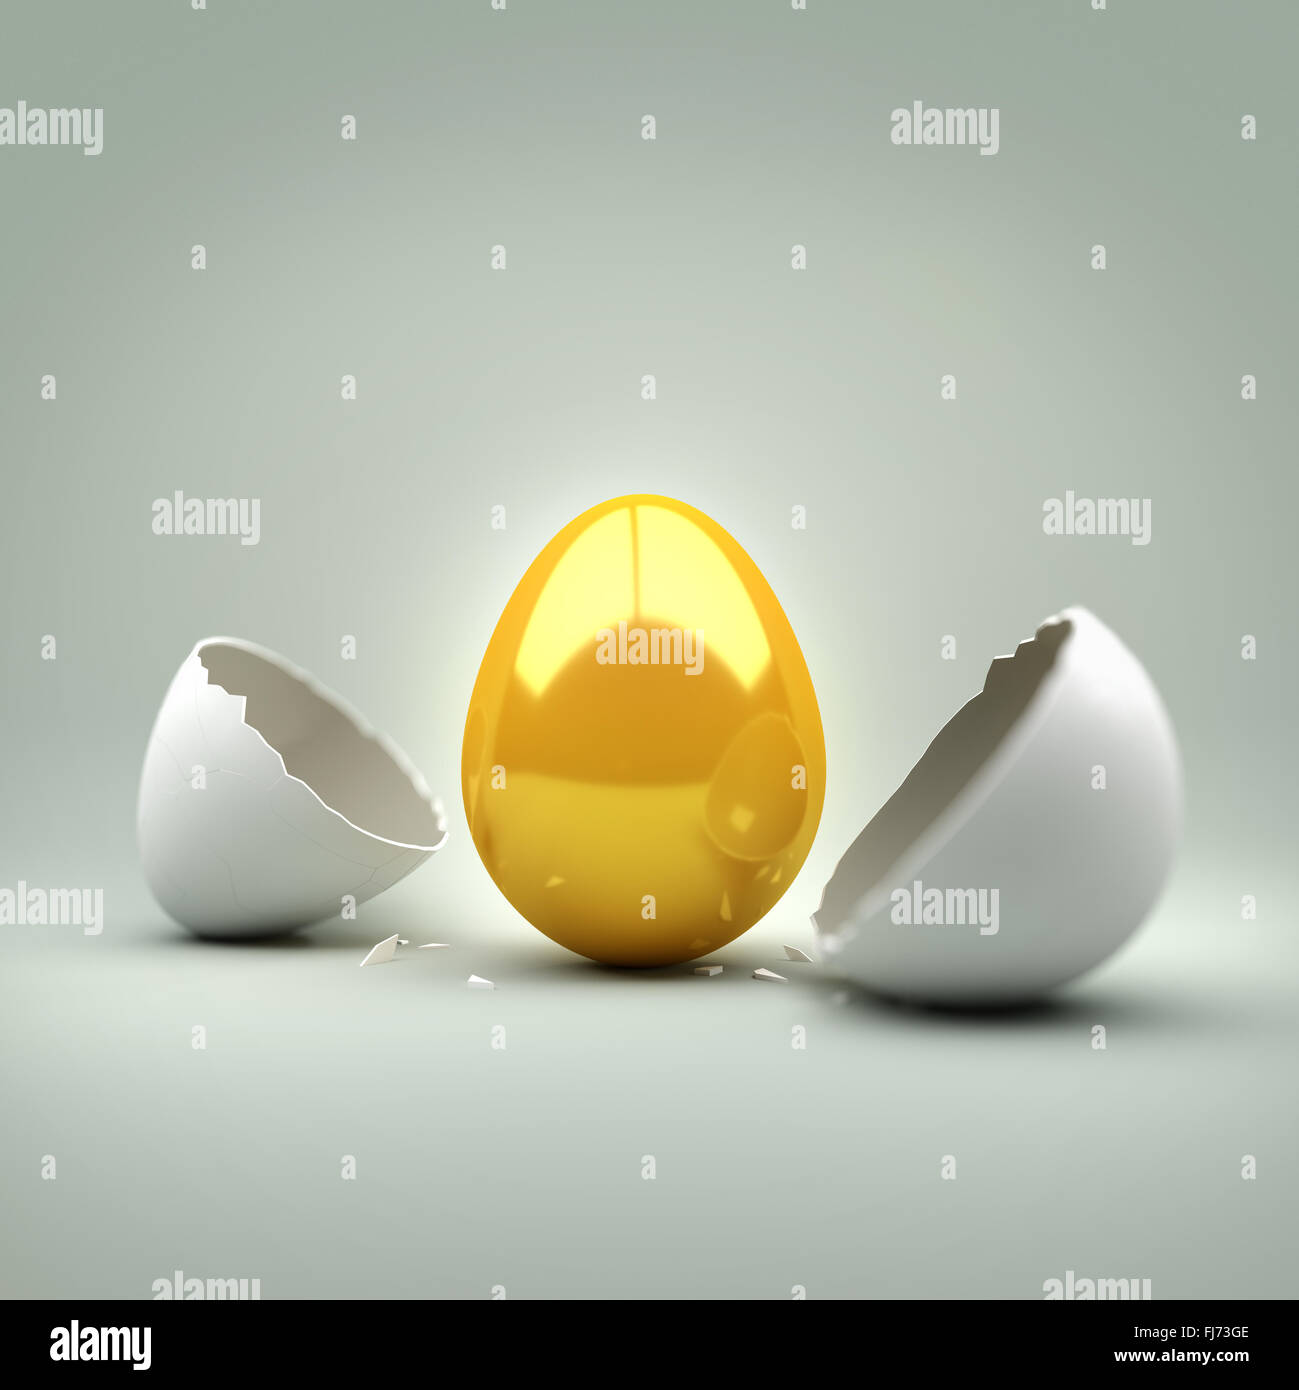 New Golden Egg. A cracked egg revealing a new golden egg. Concept. Stock Photo